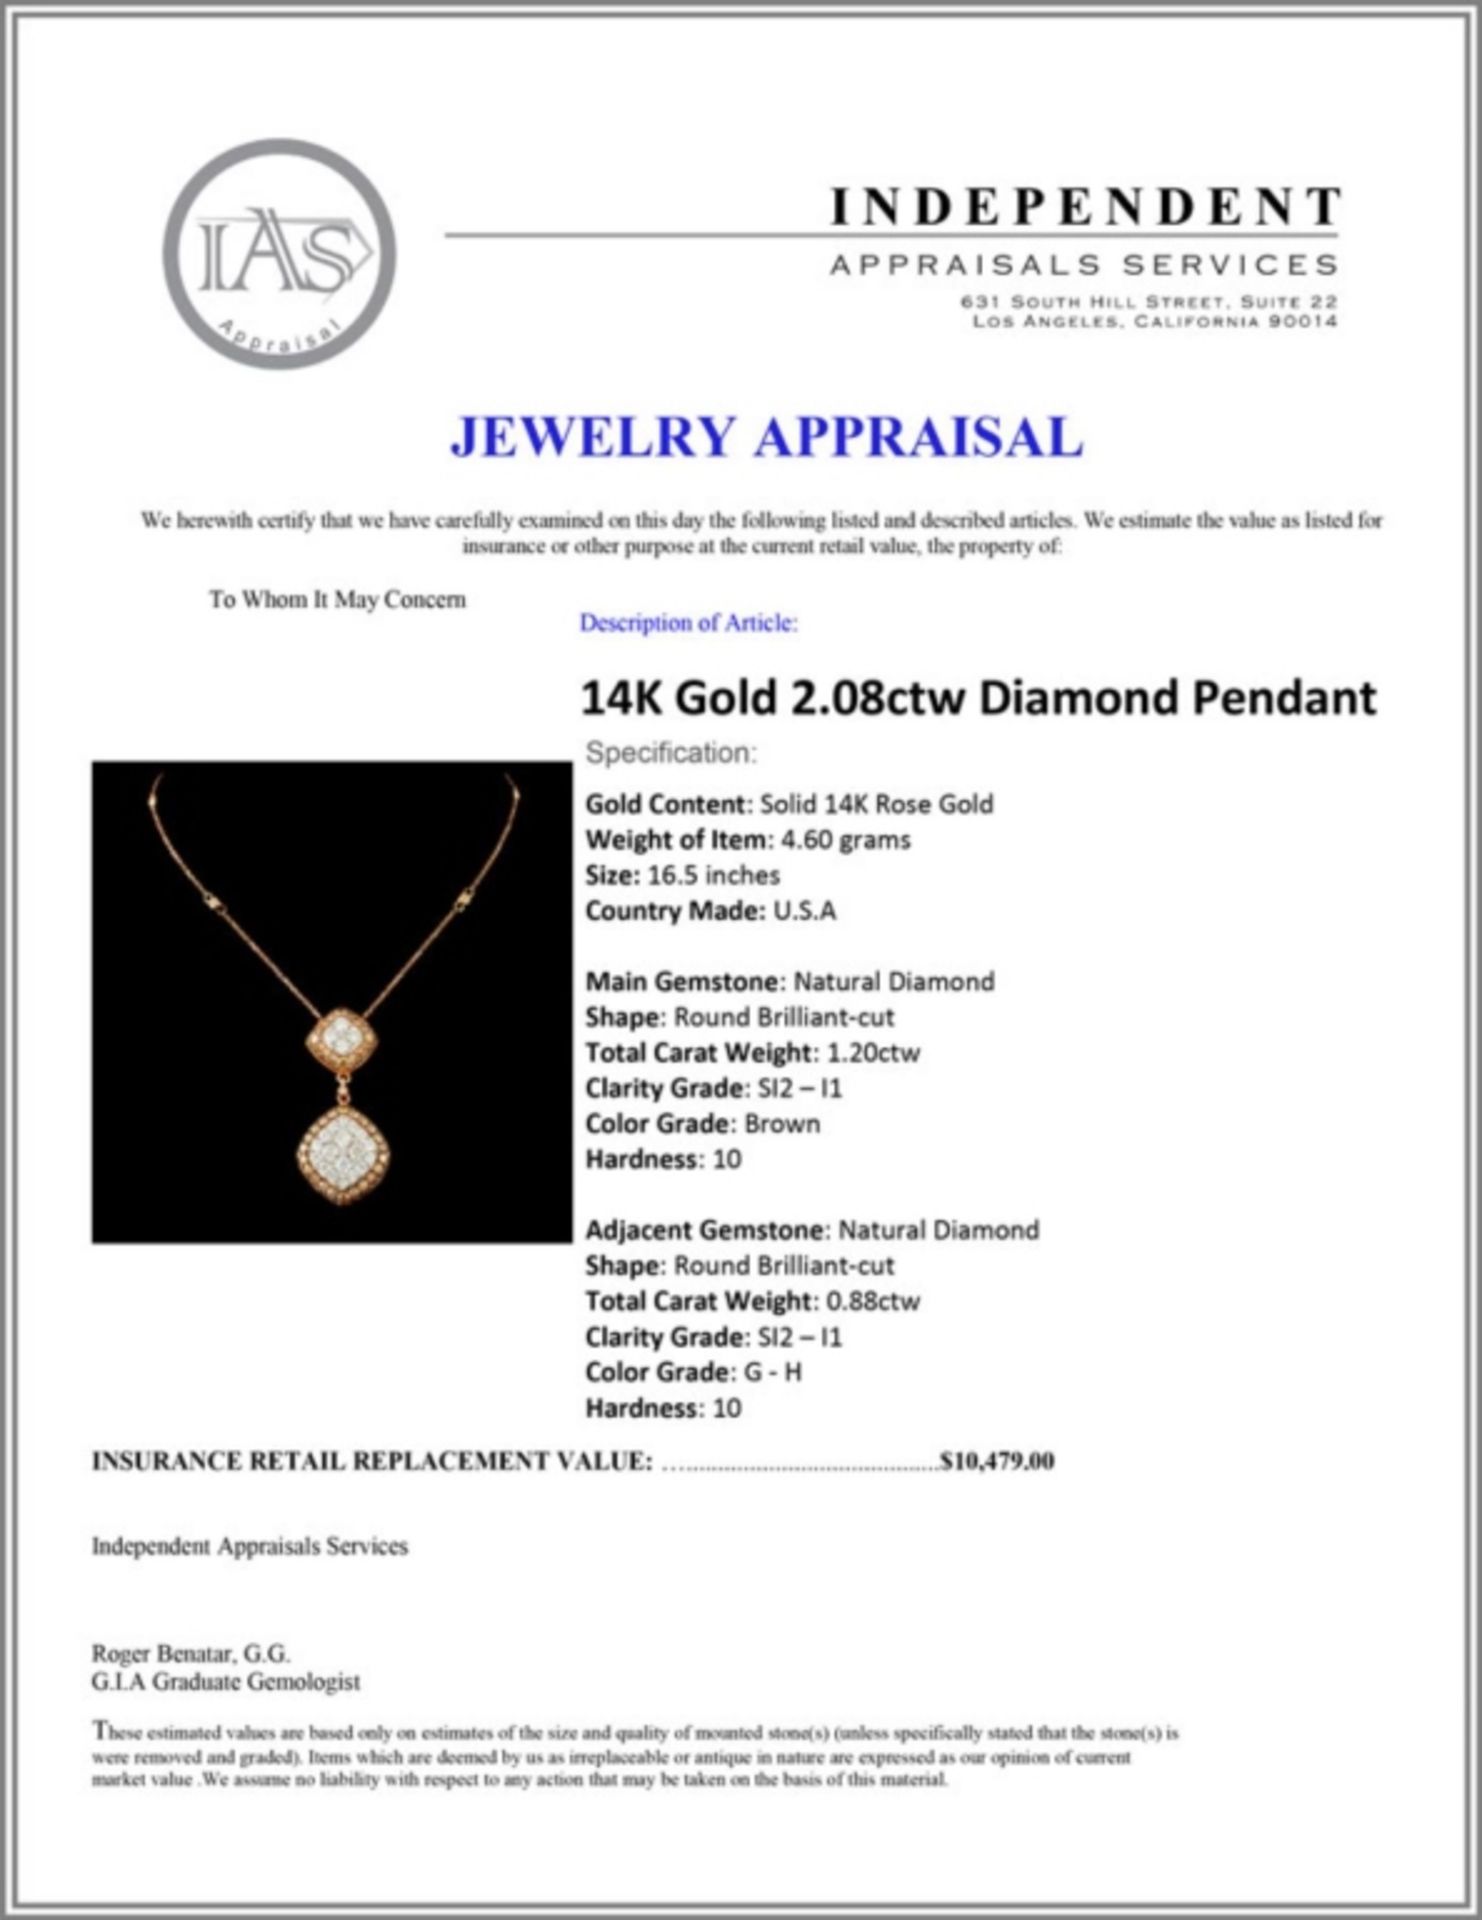 14K Gold 2.08ctw Diamond Pendant - Image 4 of 4